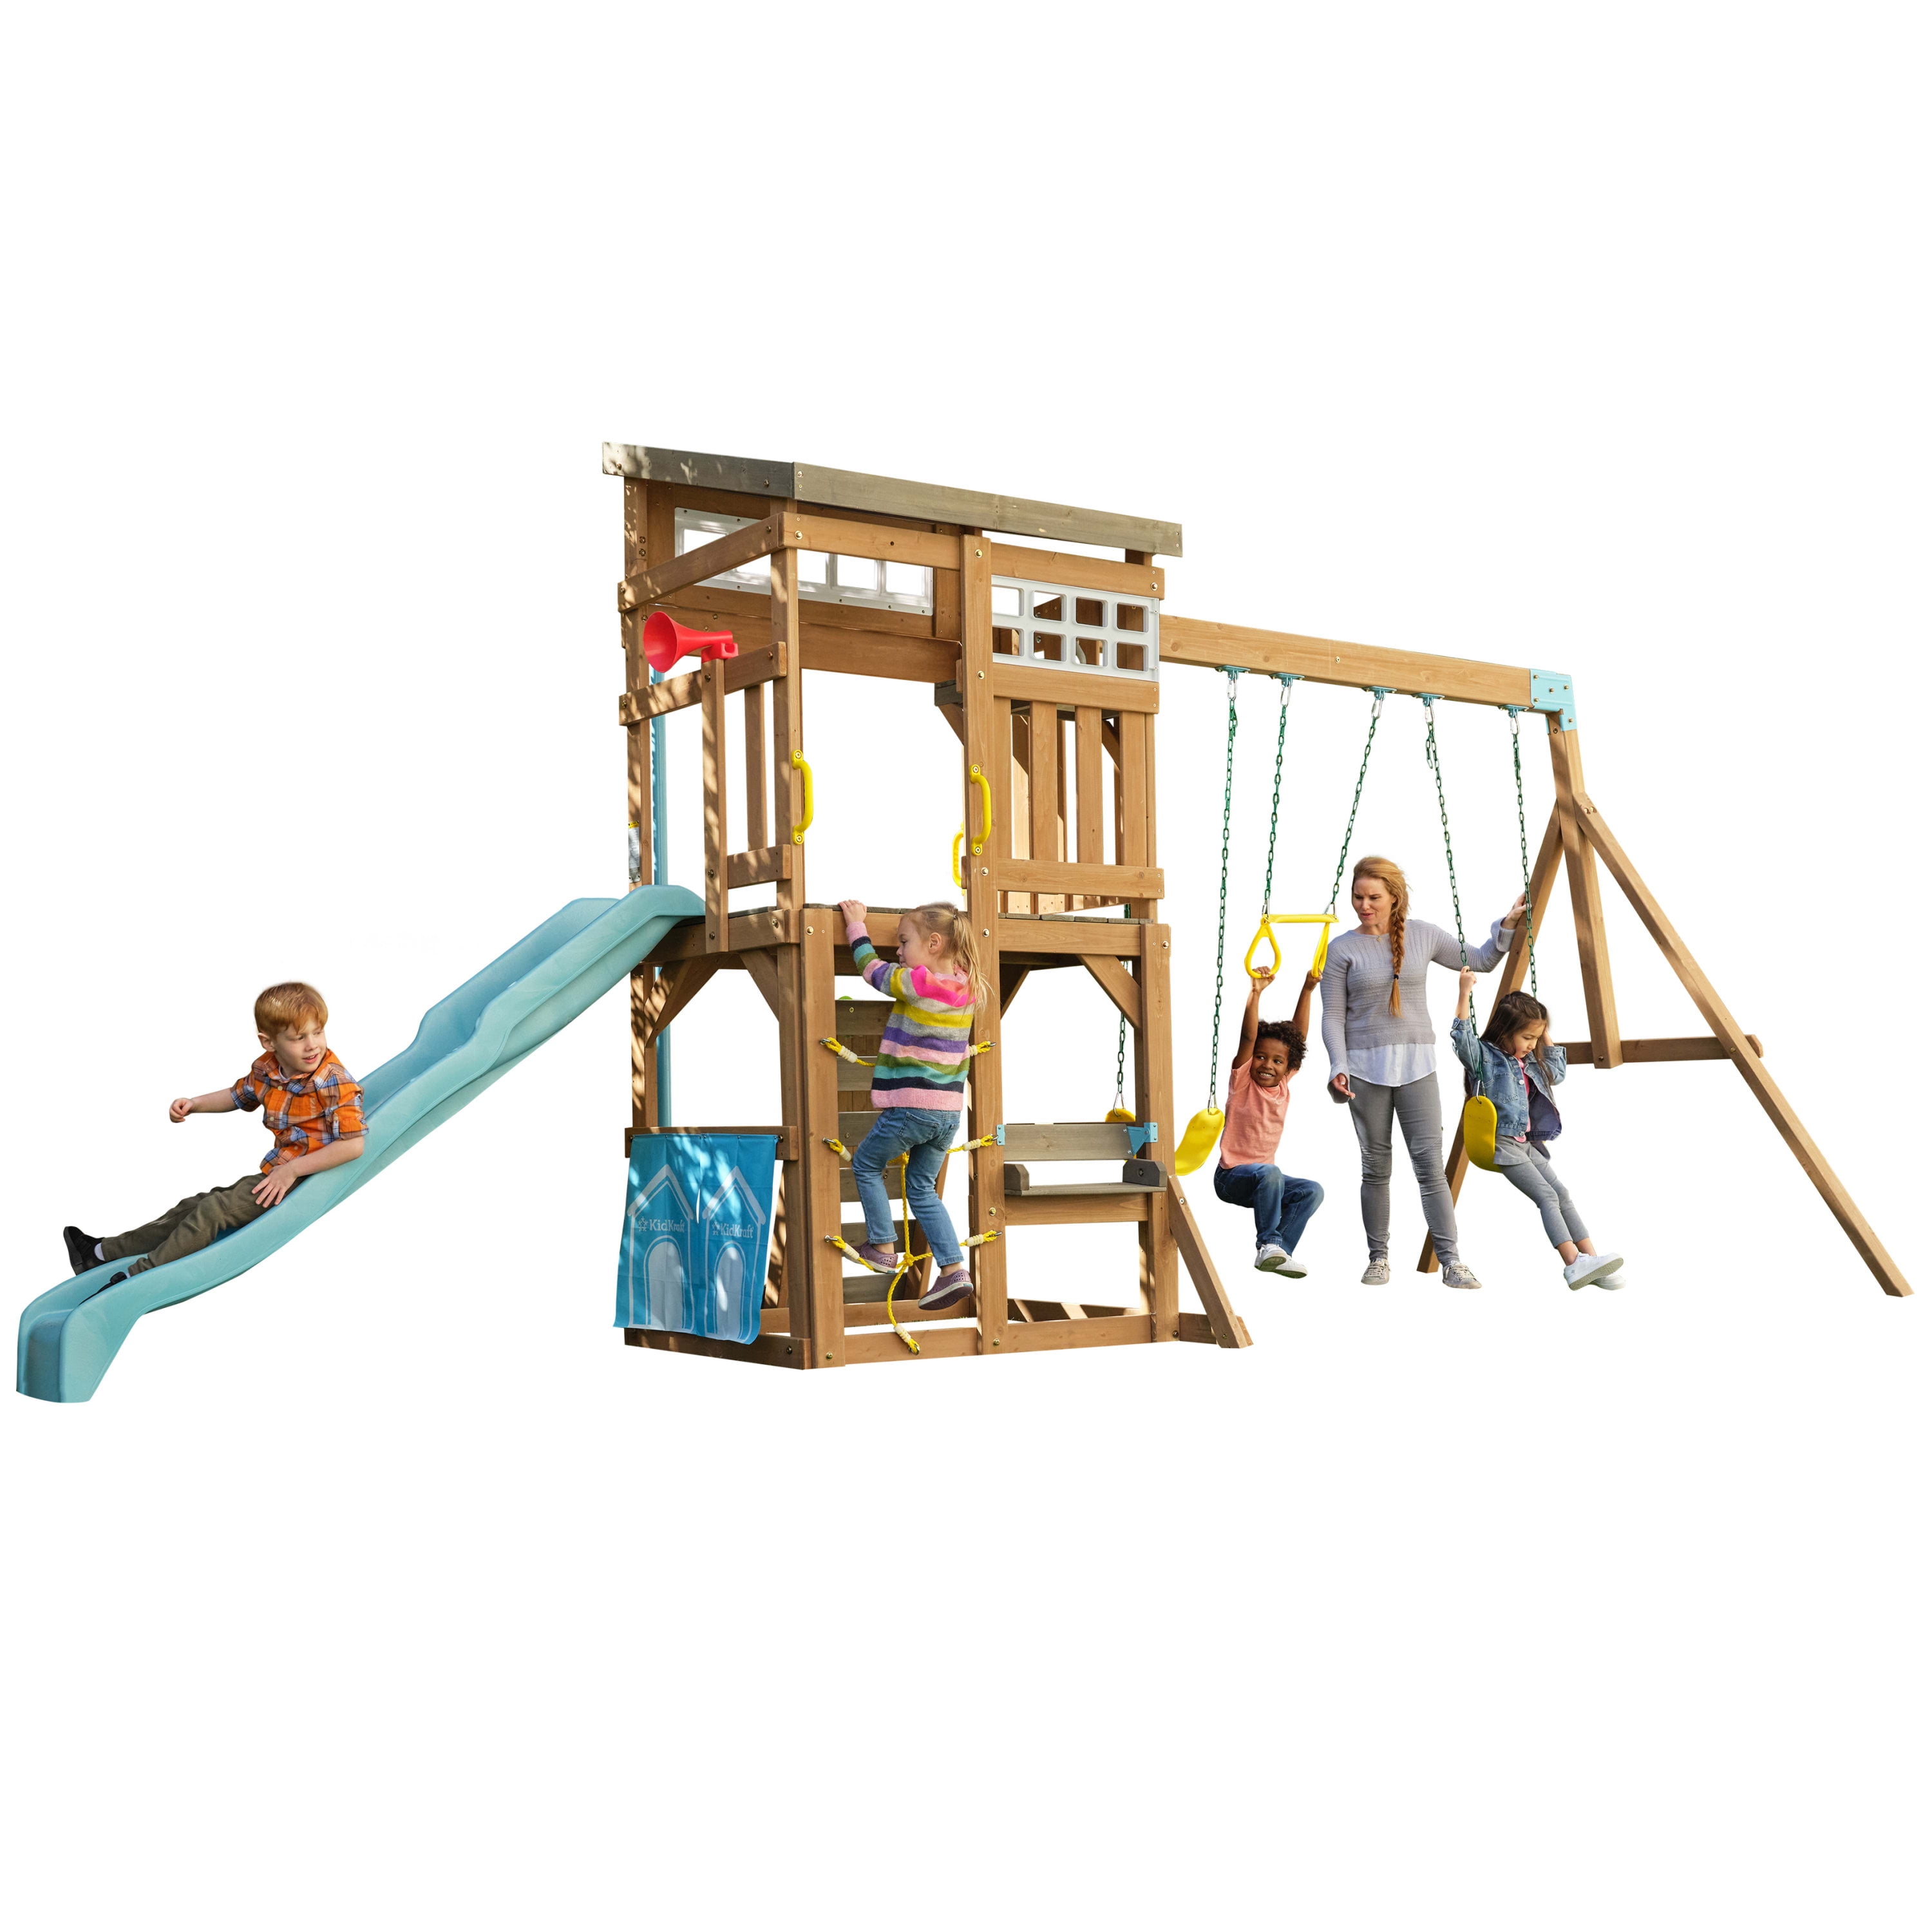 KidKraft Modern Outdoor Wooden Swing Set / Playset with Fireman’s Pole, Reversible Bench